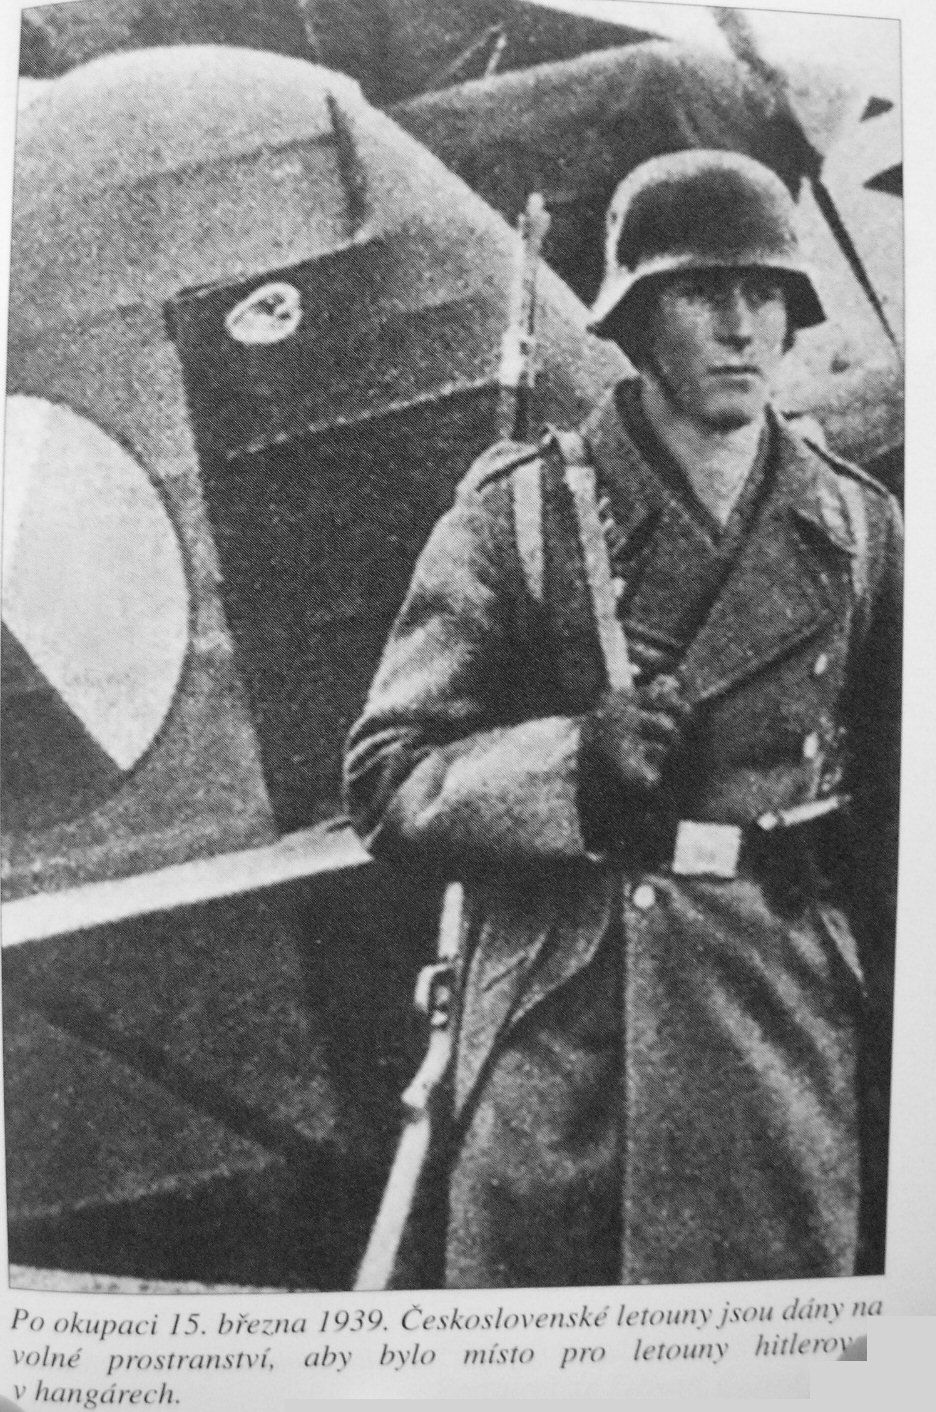 A German soldier is guarding a captured Czechoslovak Avia B-534 Biplane Fig